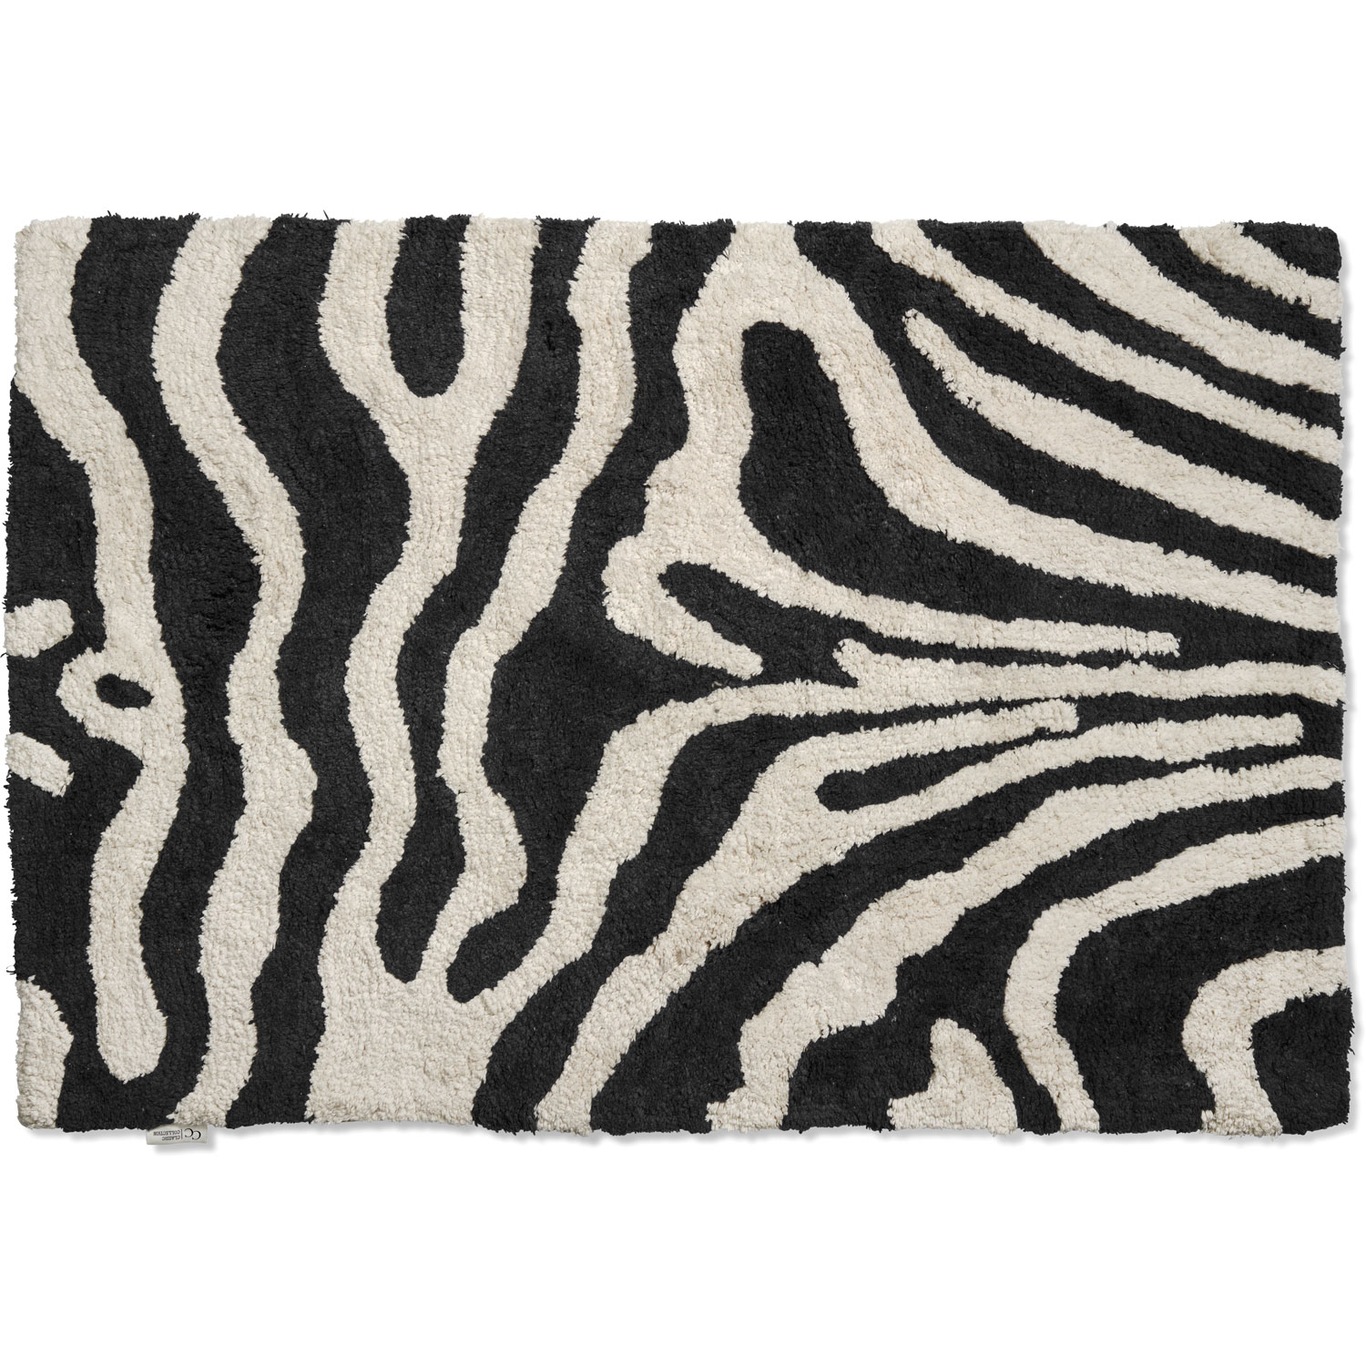 Zebra Badrumsmatta 60x90 cm, Svart/Vit